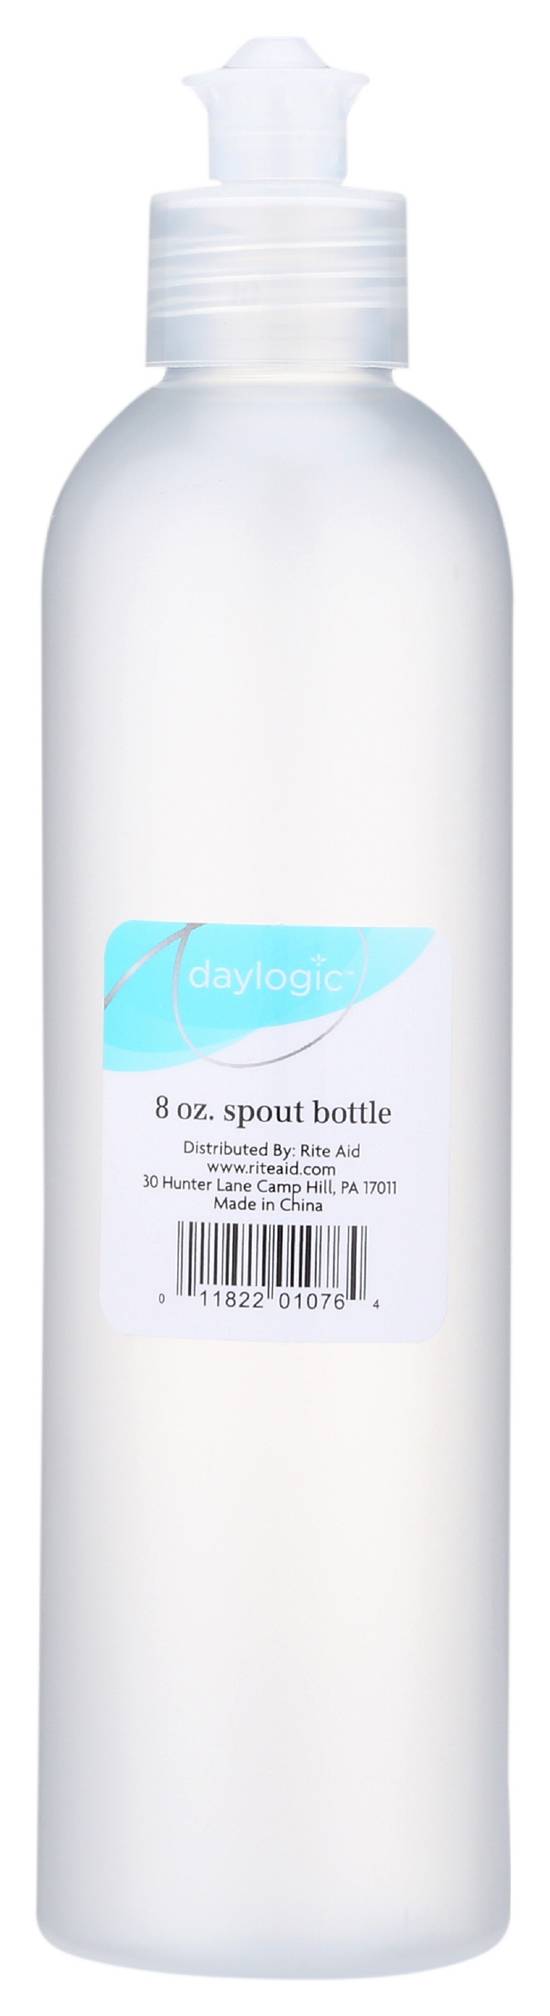 Daylogic Spout Bottle - 8 oz